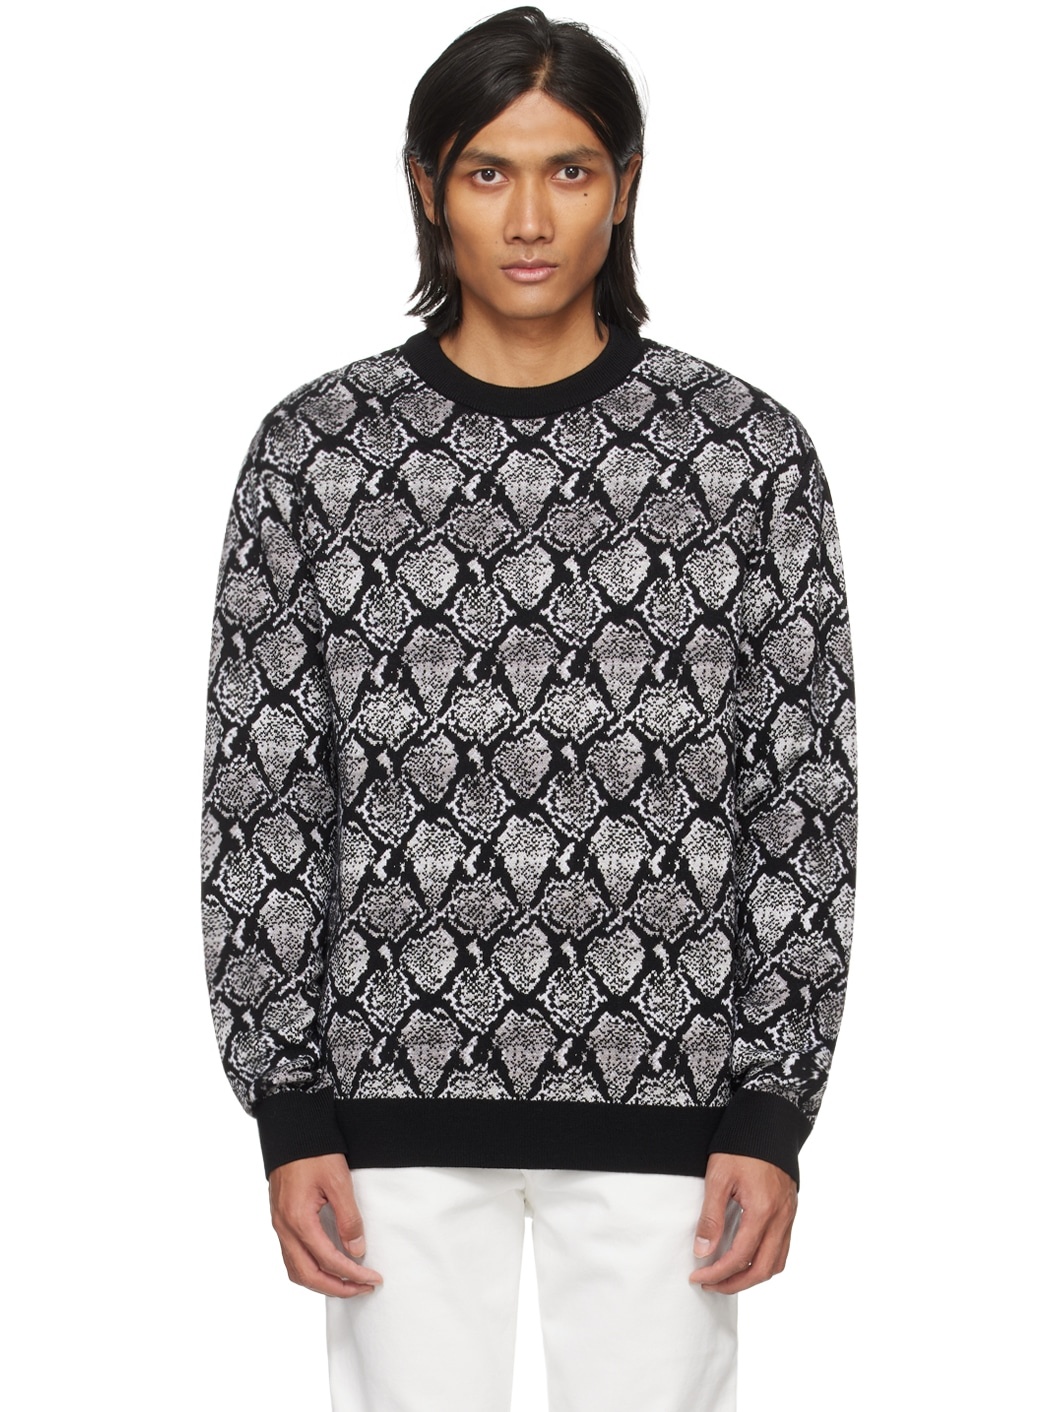 Black & Gray Snakeskin Sweater - 1